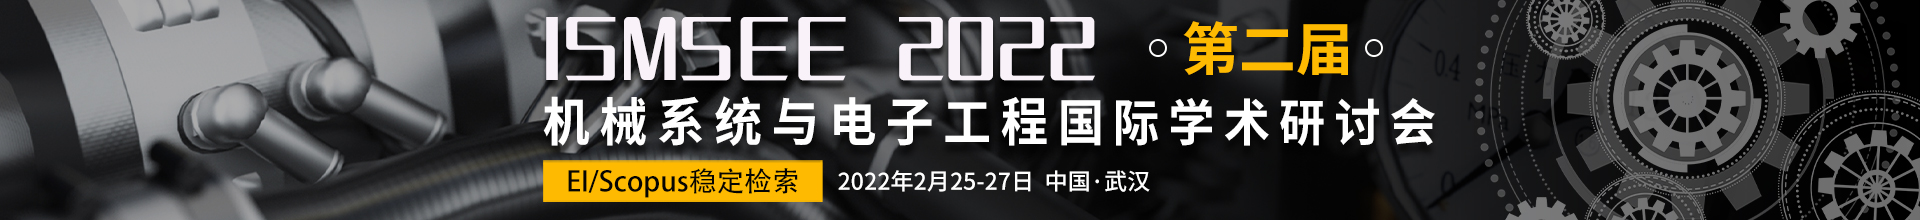 2月武汉-ISMSEE2022-会议云banner-张寅婕-20210817.jpg